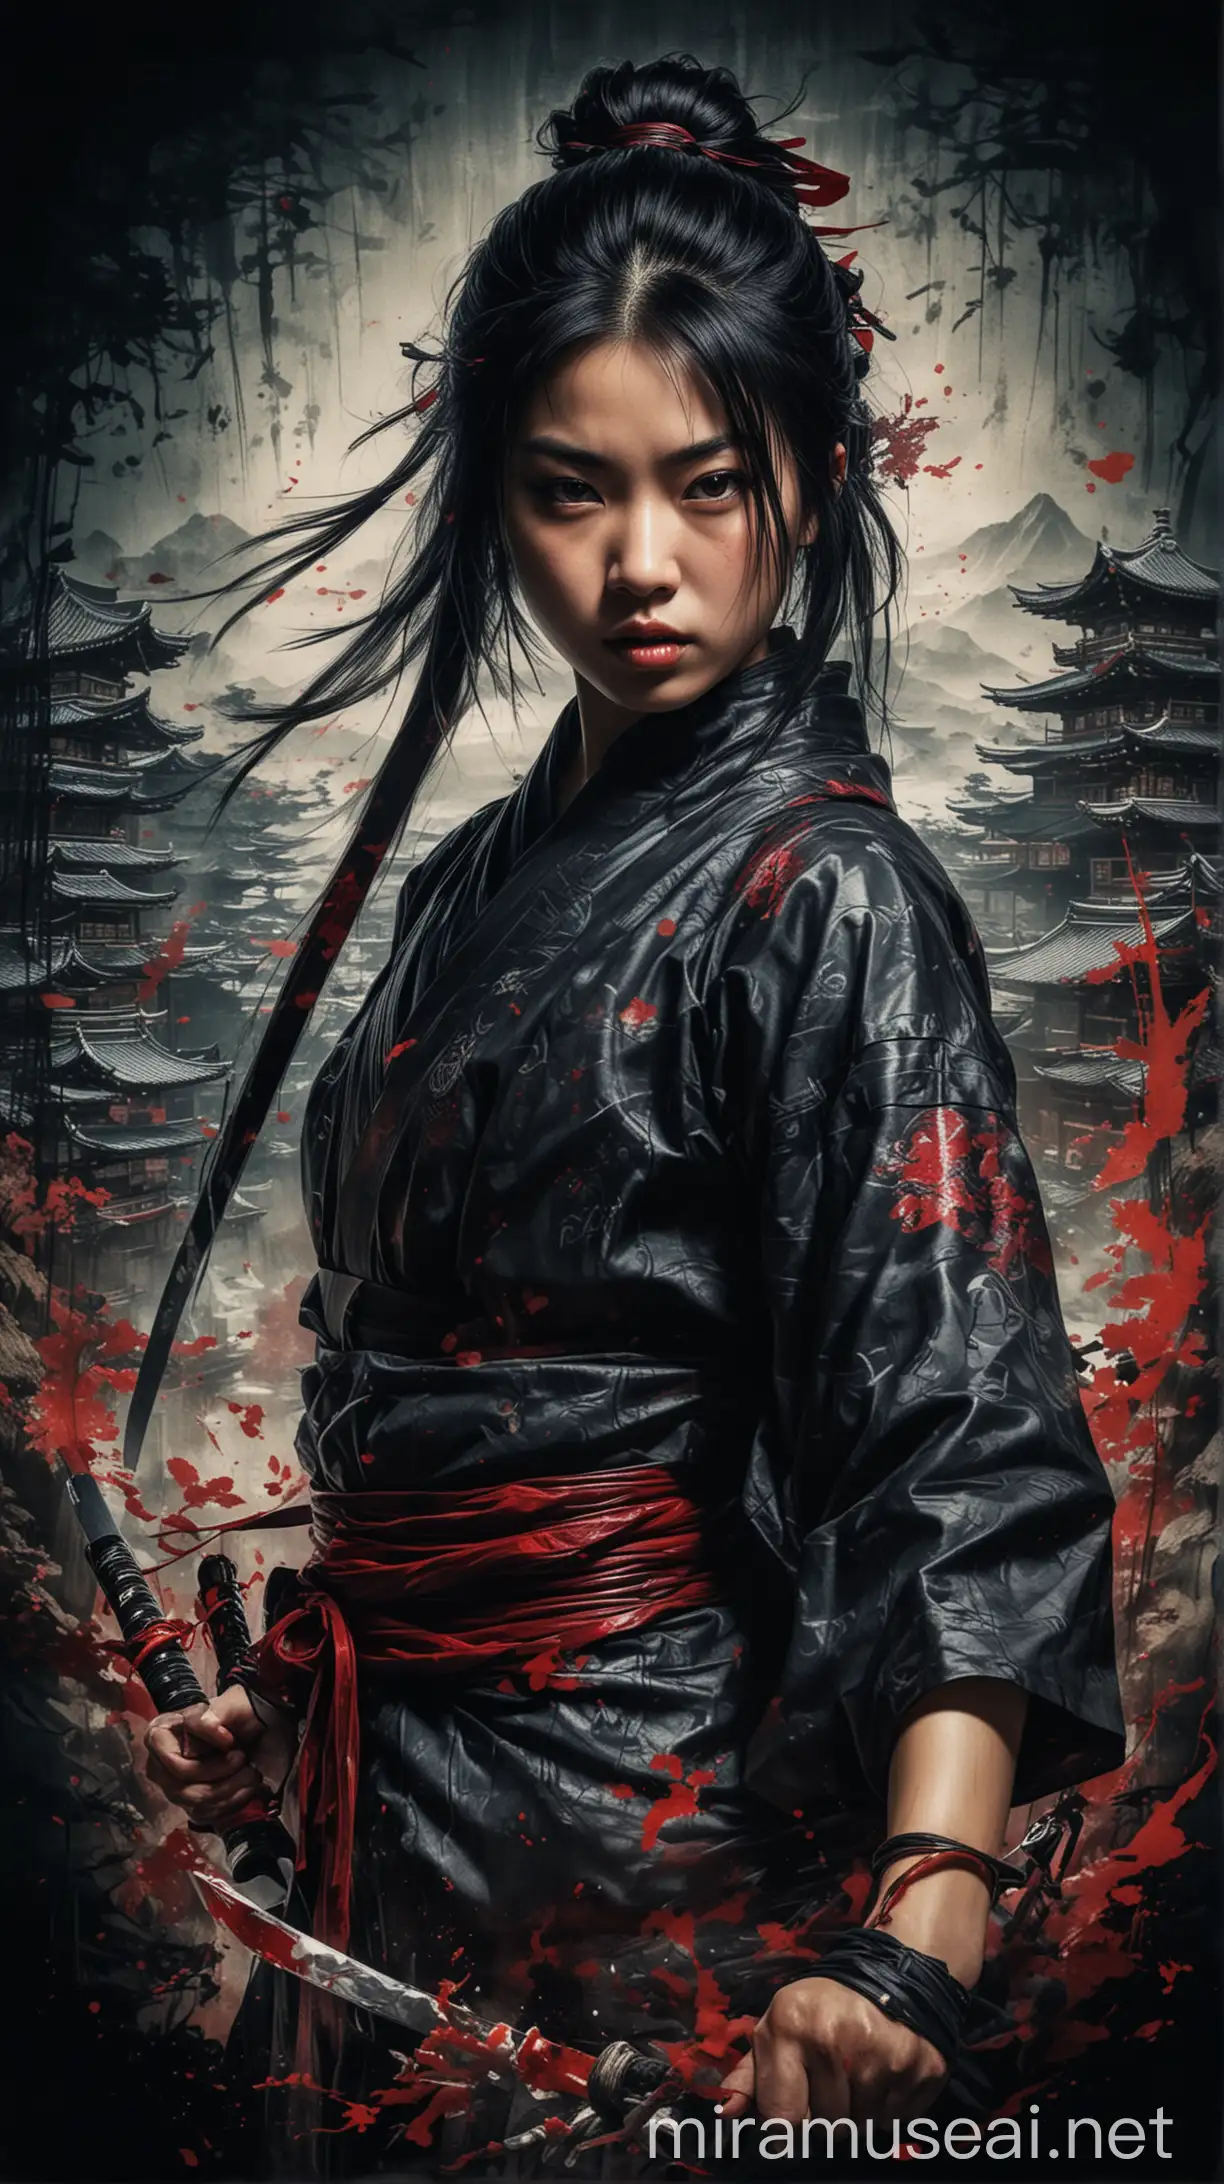 Double Exposure Asian Ninja Girl Assassin in Surreal Japanese Landscape